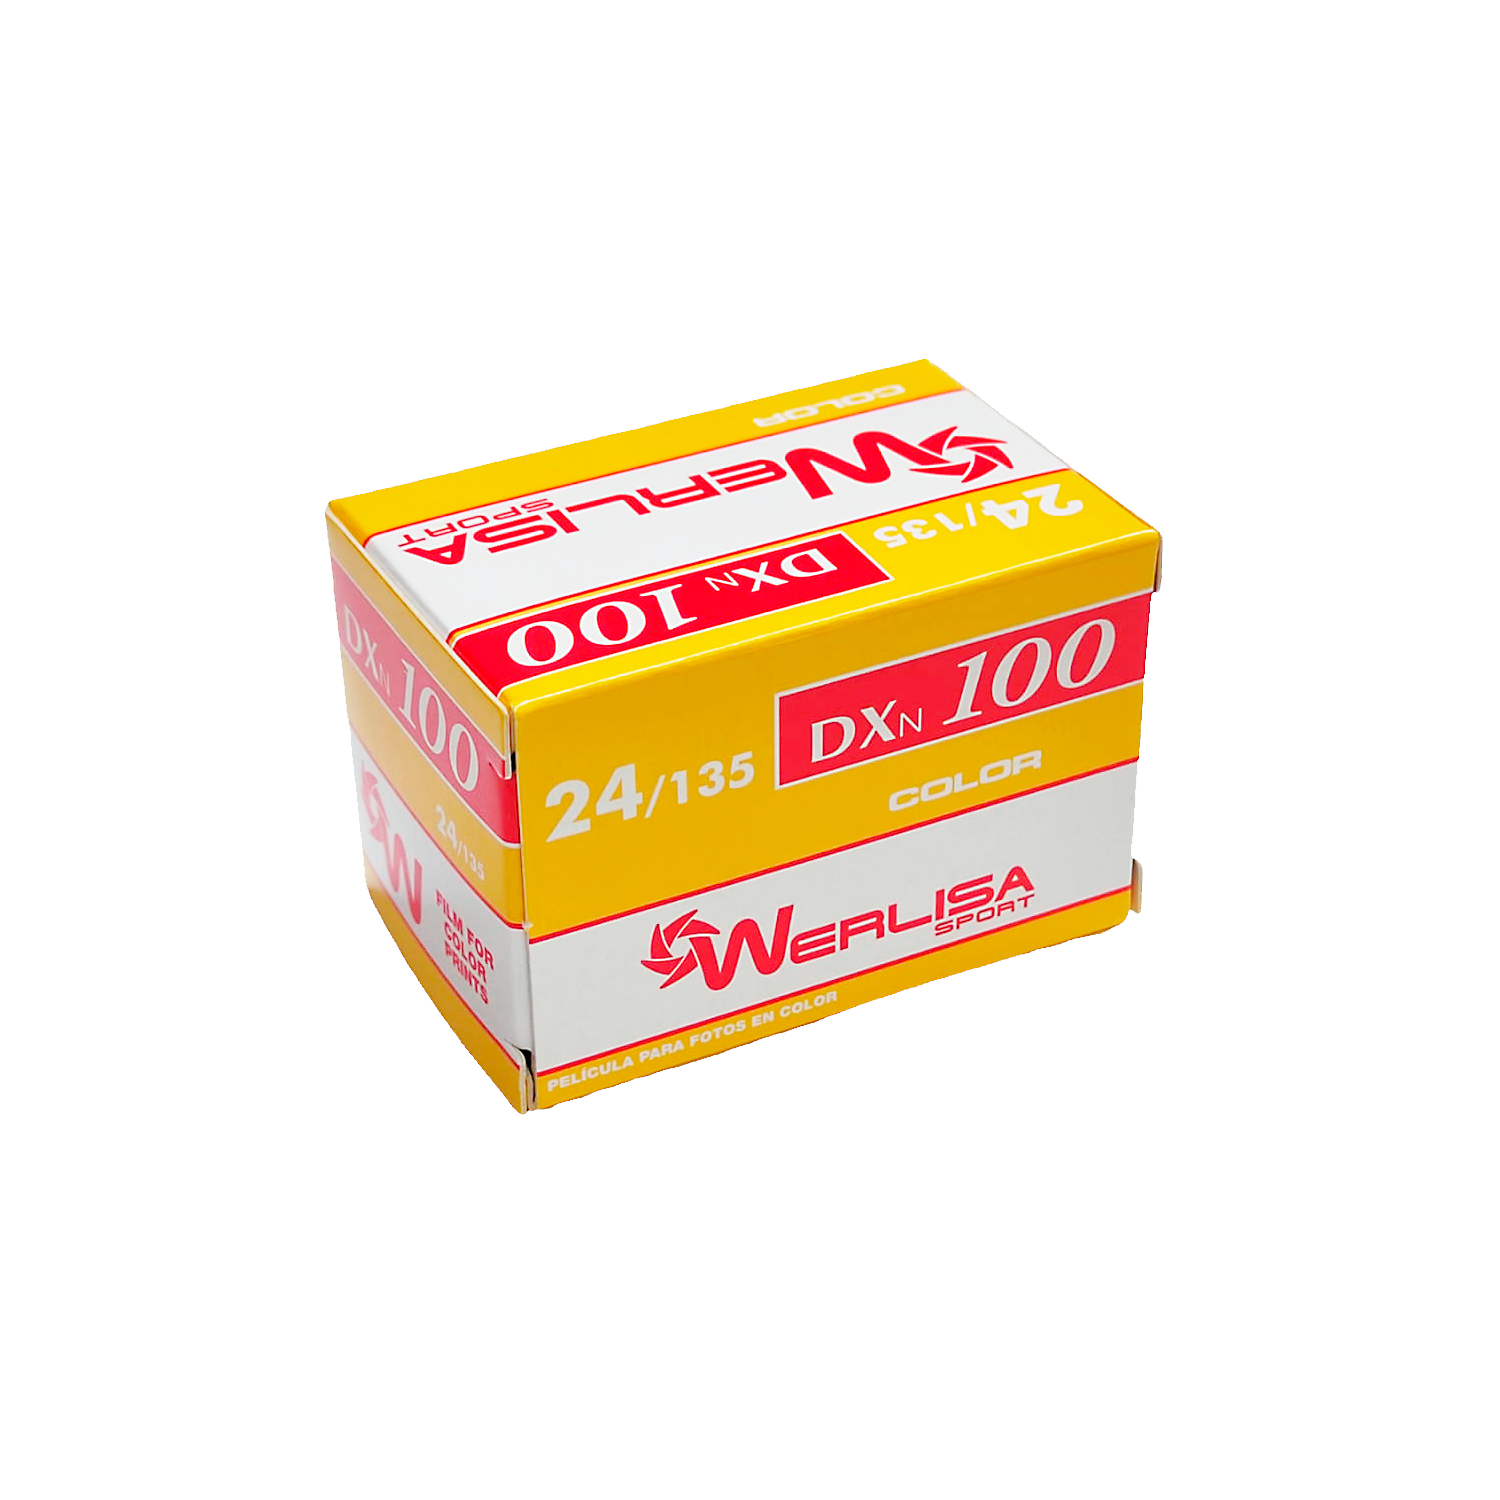 Werlisa 100 expired - 35mm